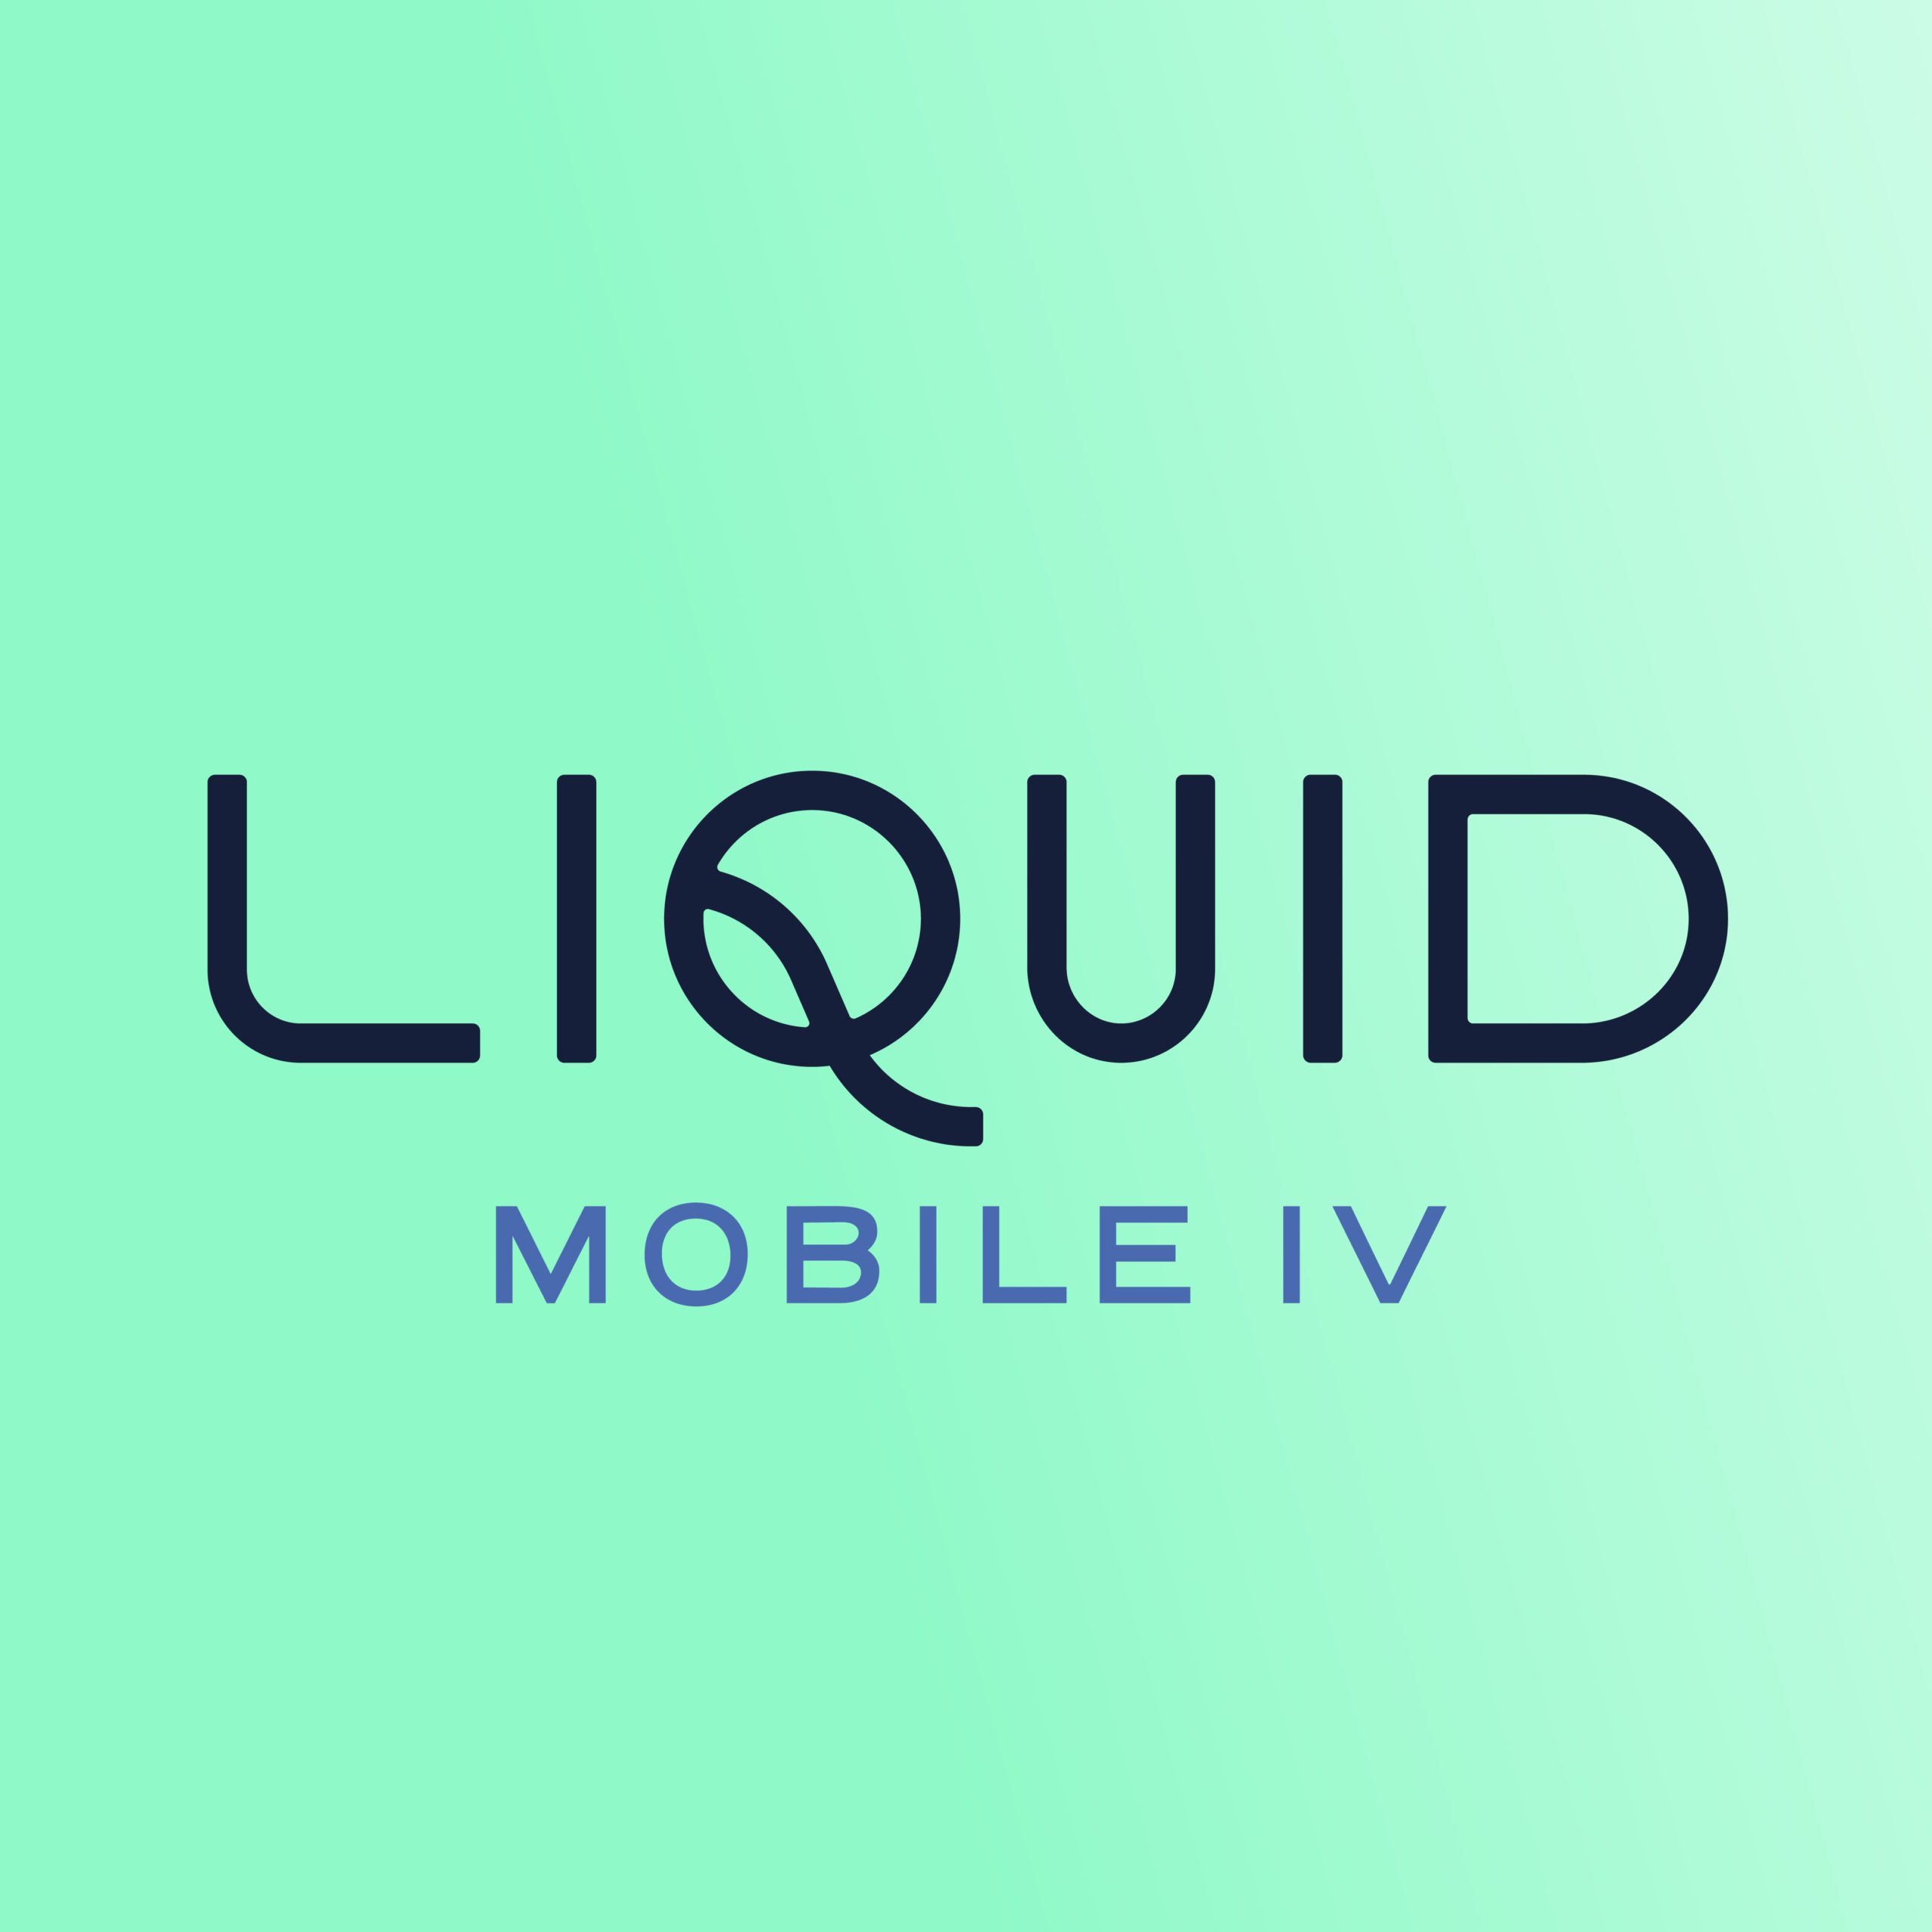 Mobile IV Hydration Provider Liquid Mobile IV Expands into Arizona